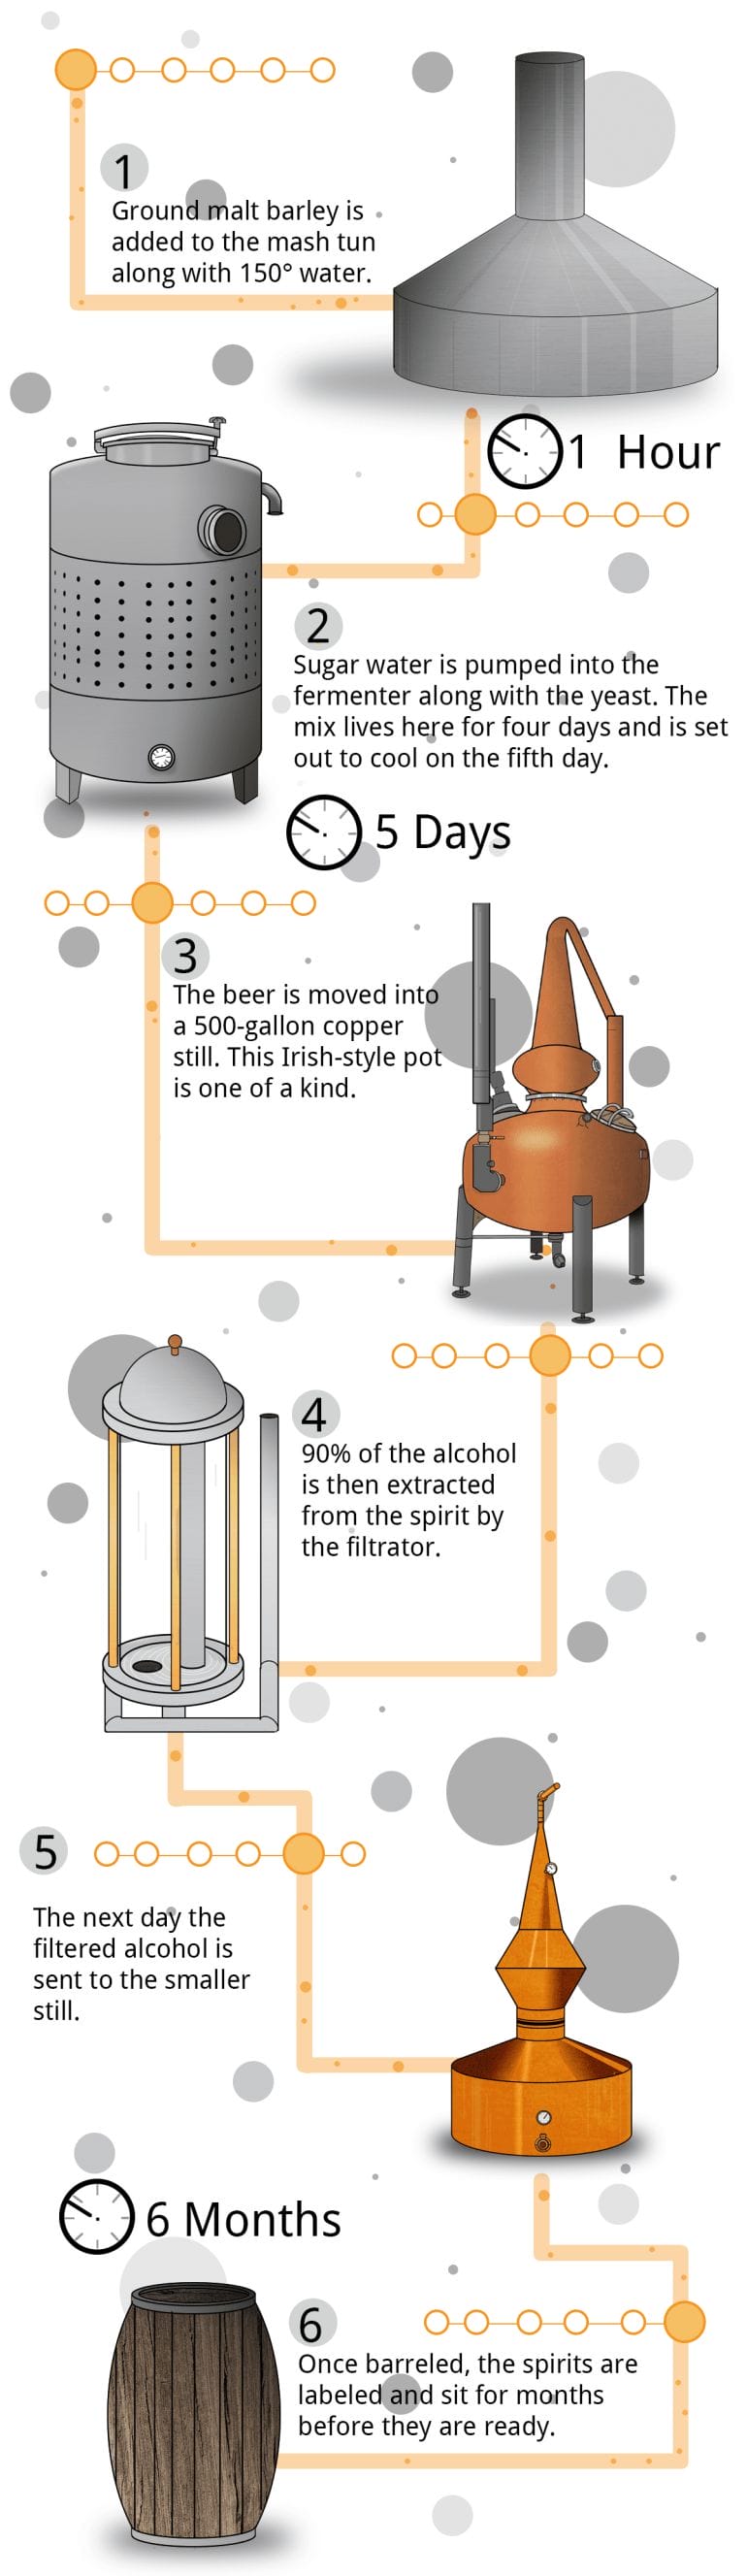 A graphic representation of the distillation process